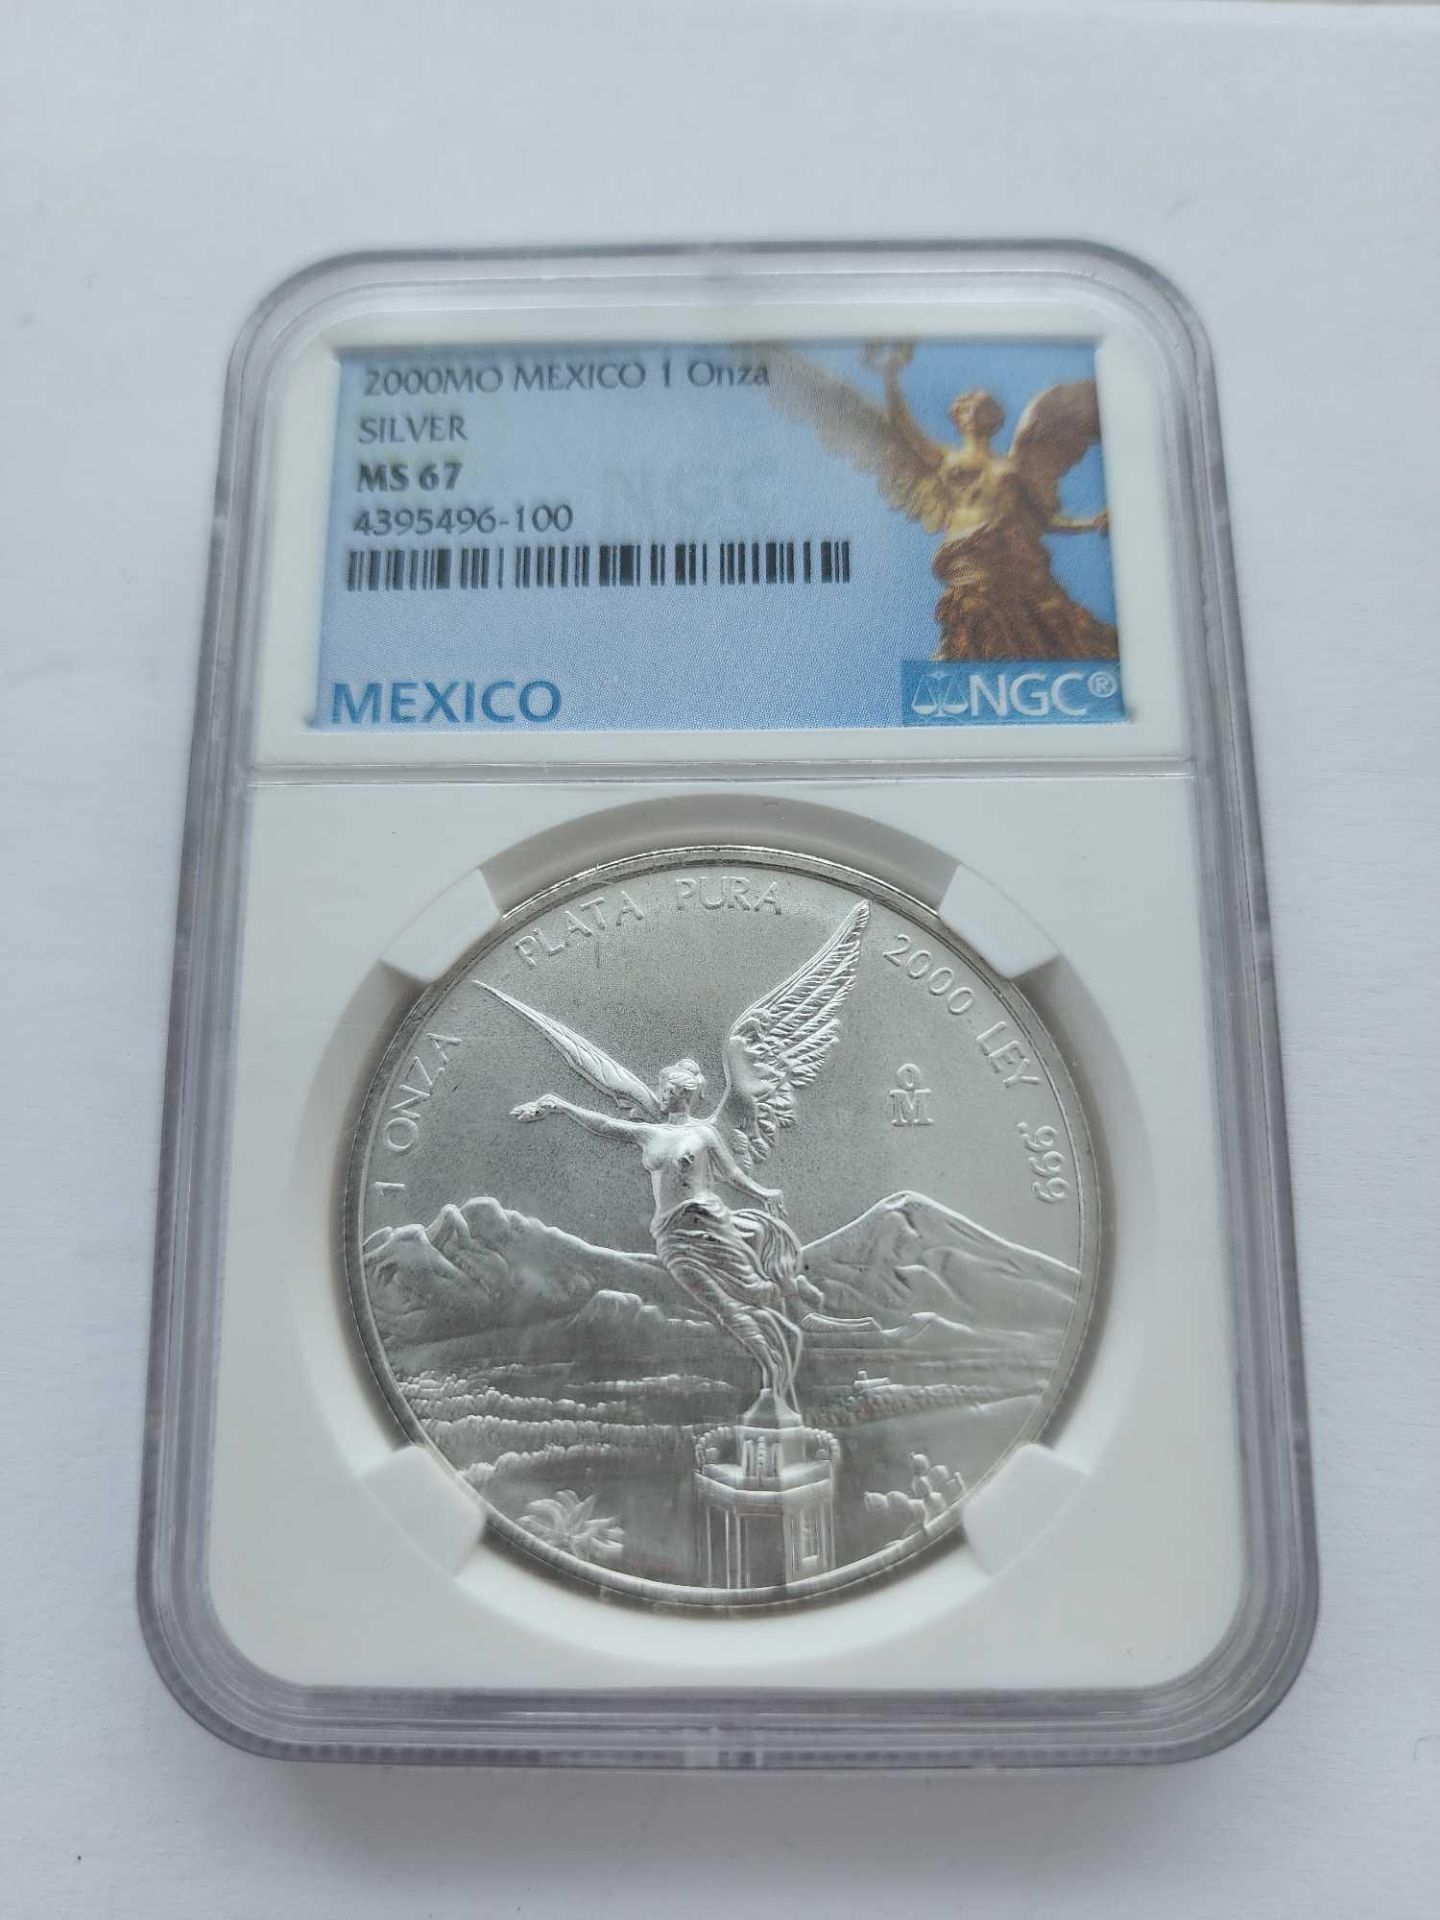 2000 Mexico 1 onza silver graded coin